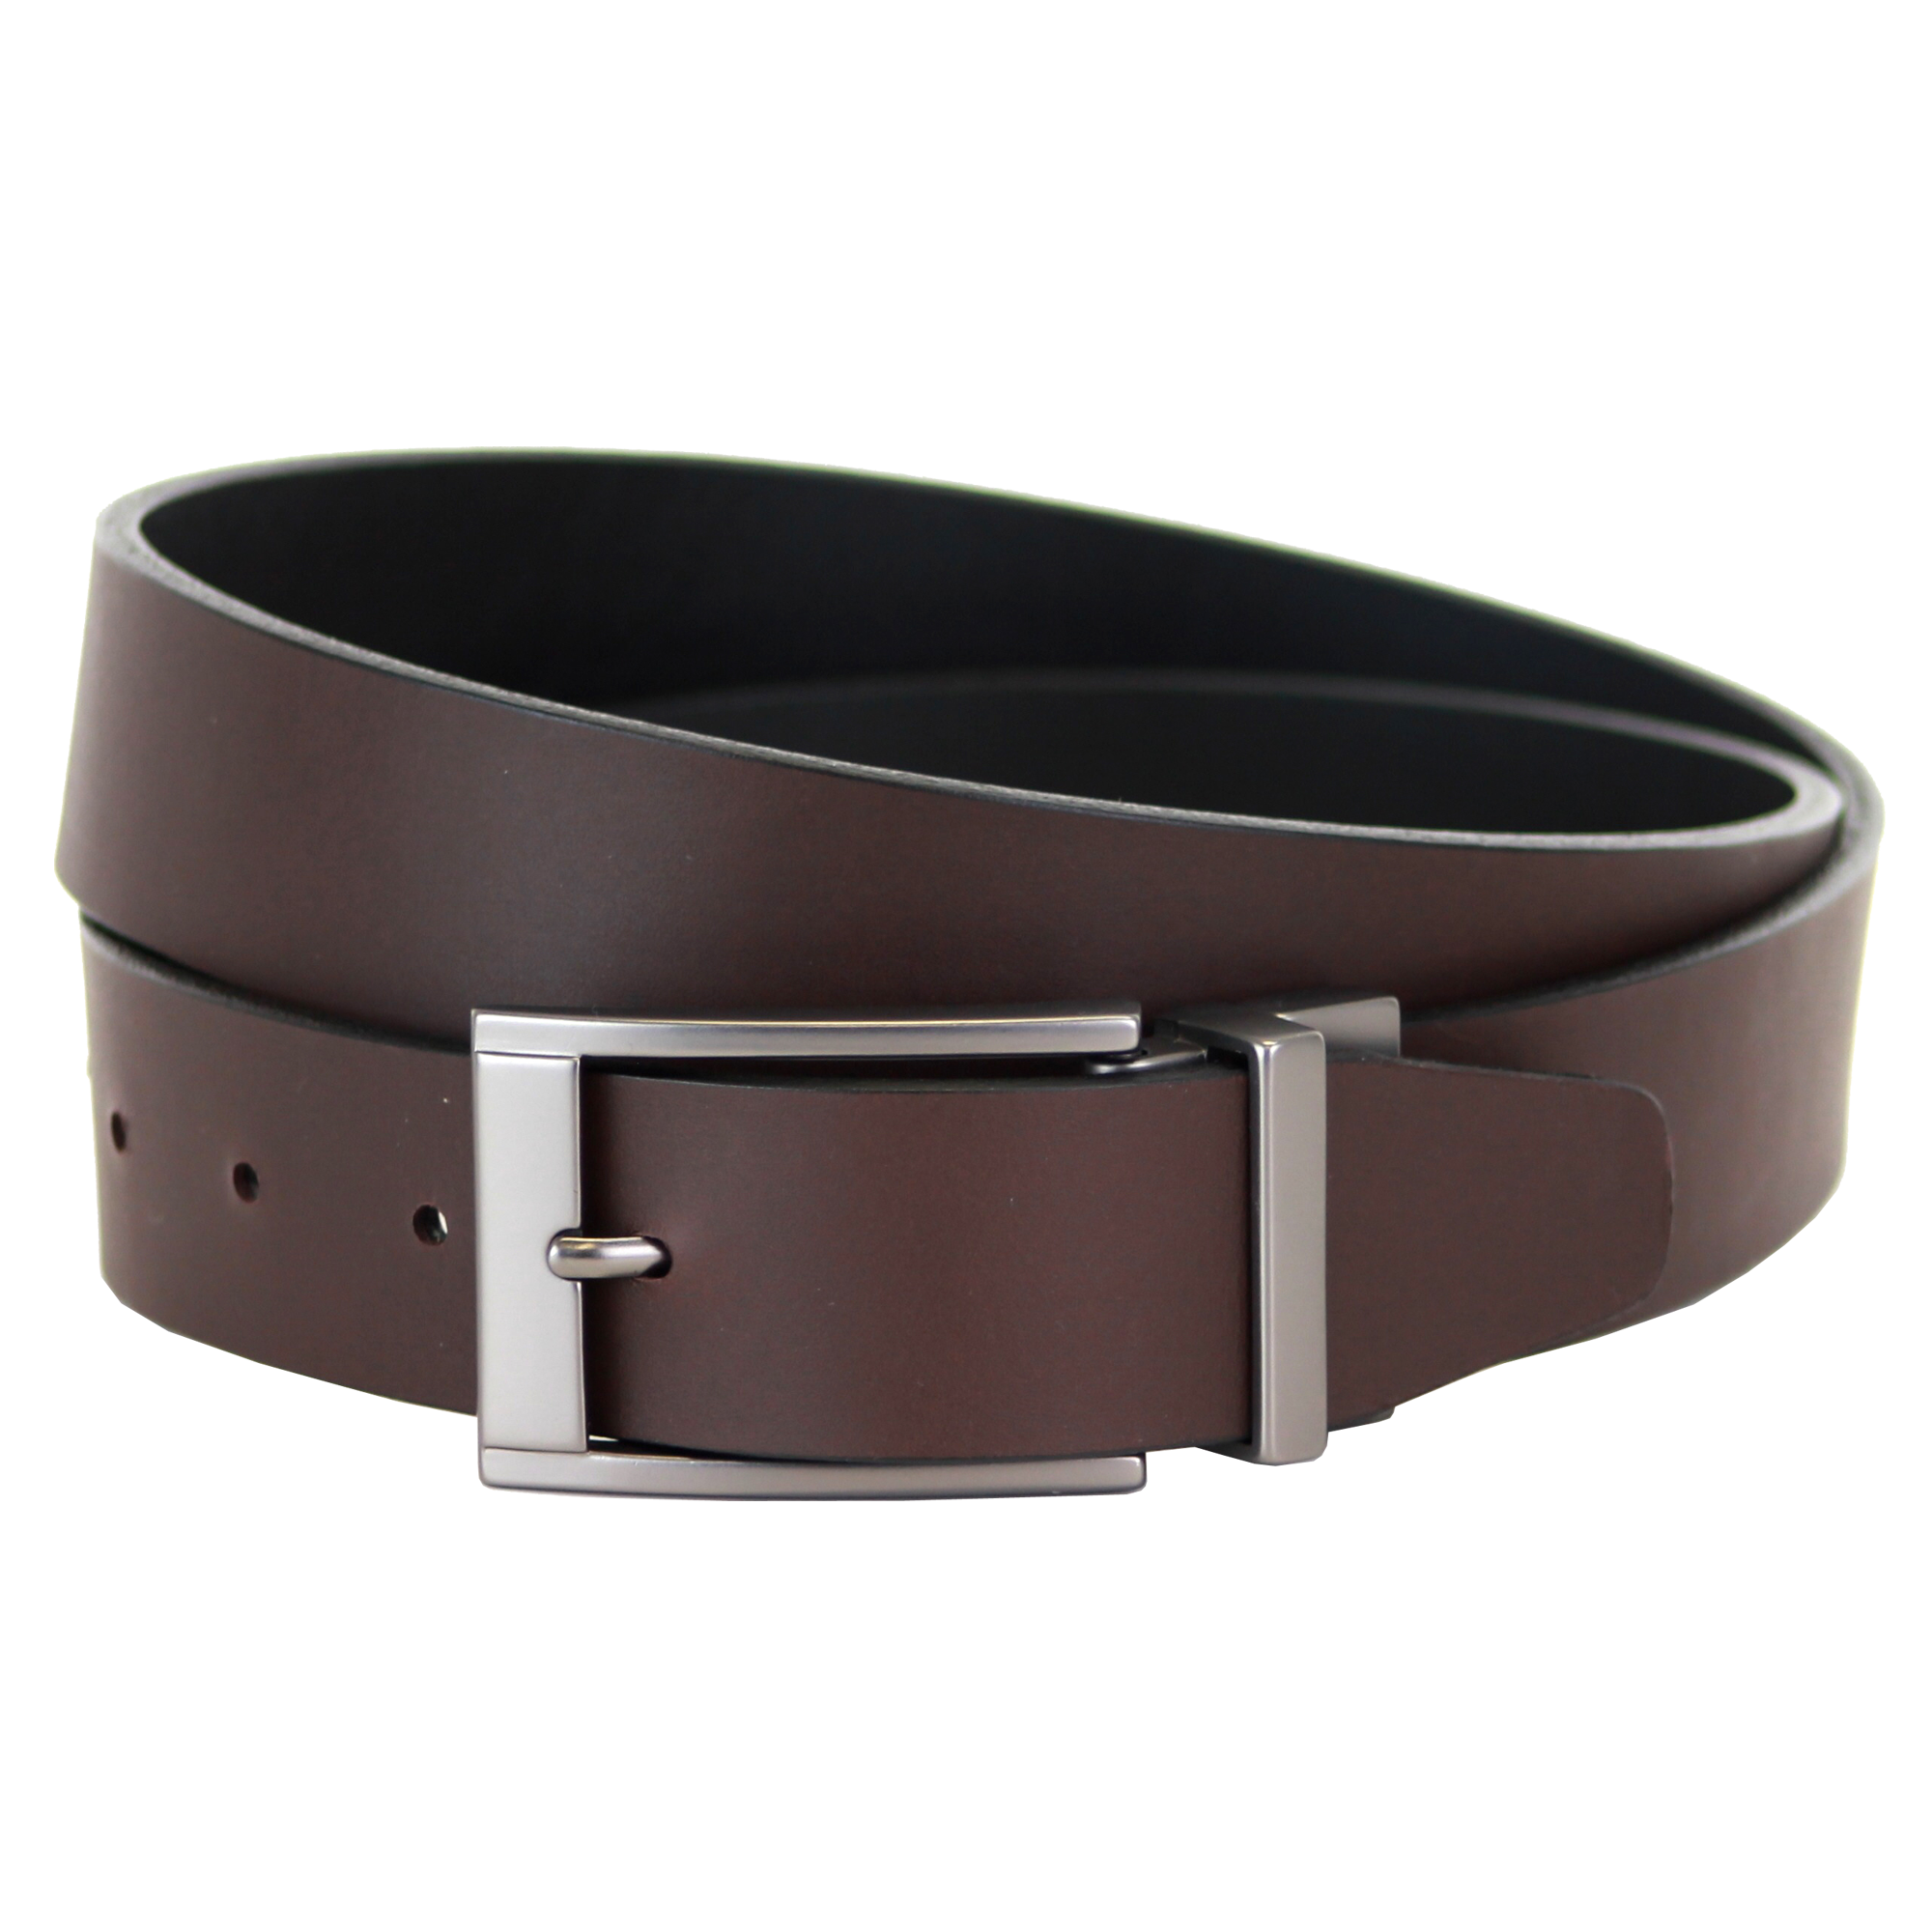 Leather Belt Png Image - Belt, Transparent background PNG HD thumbnail